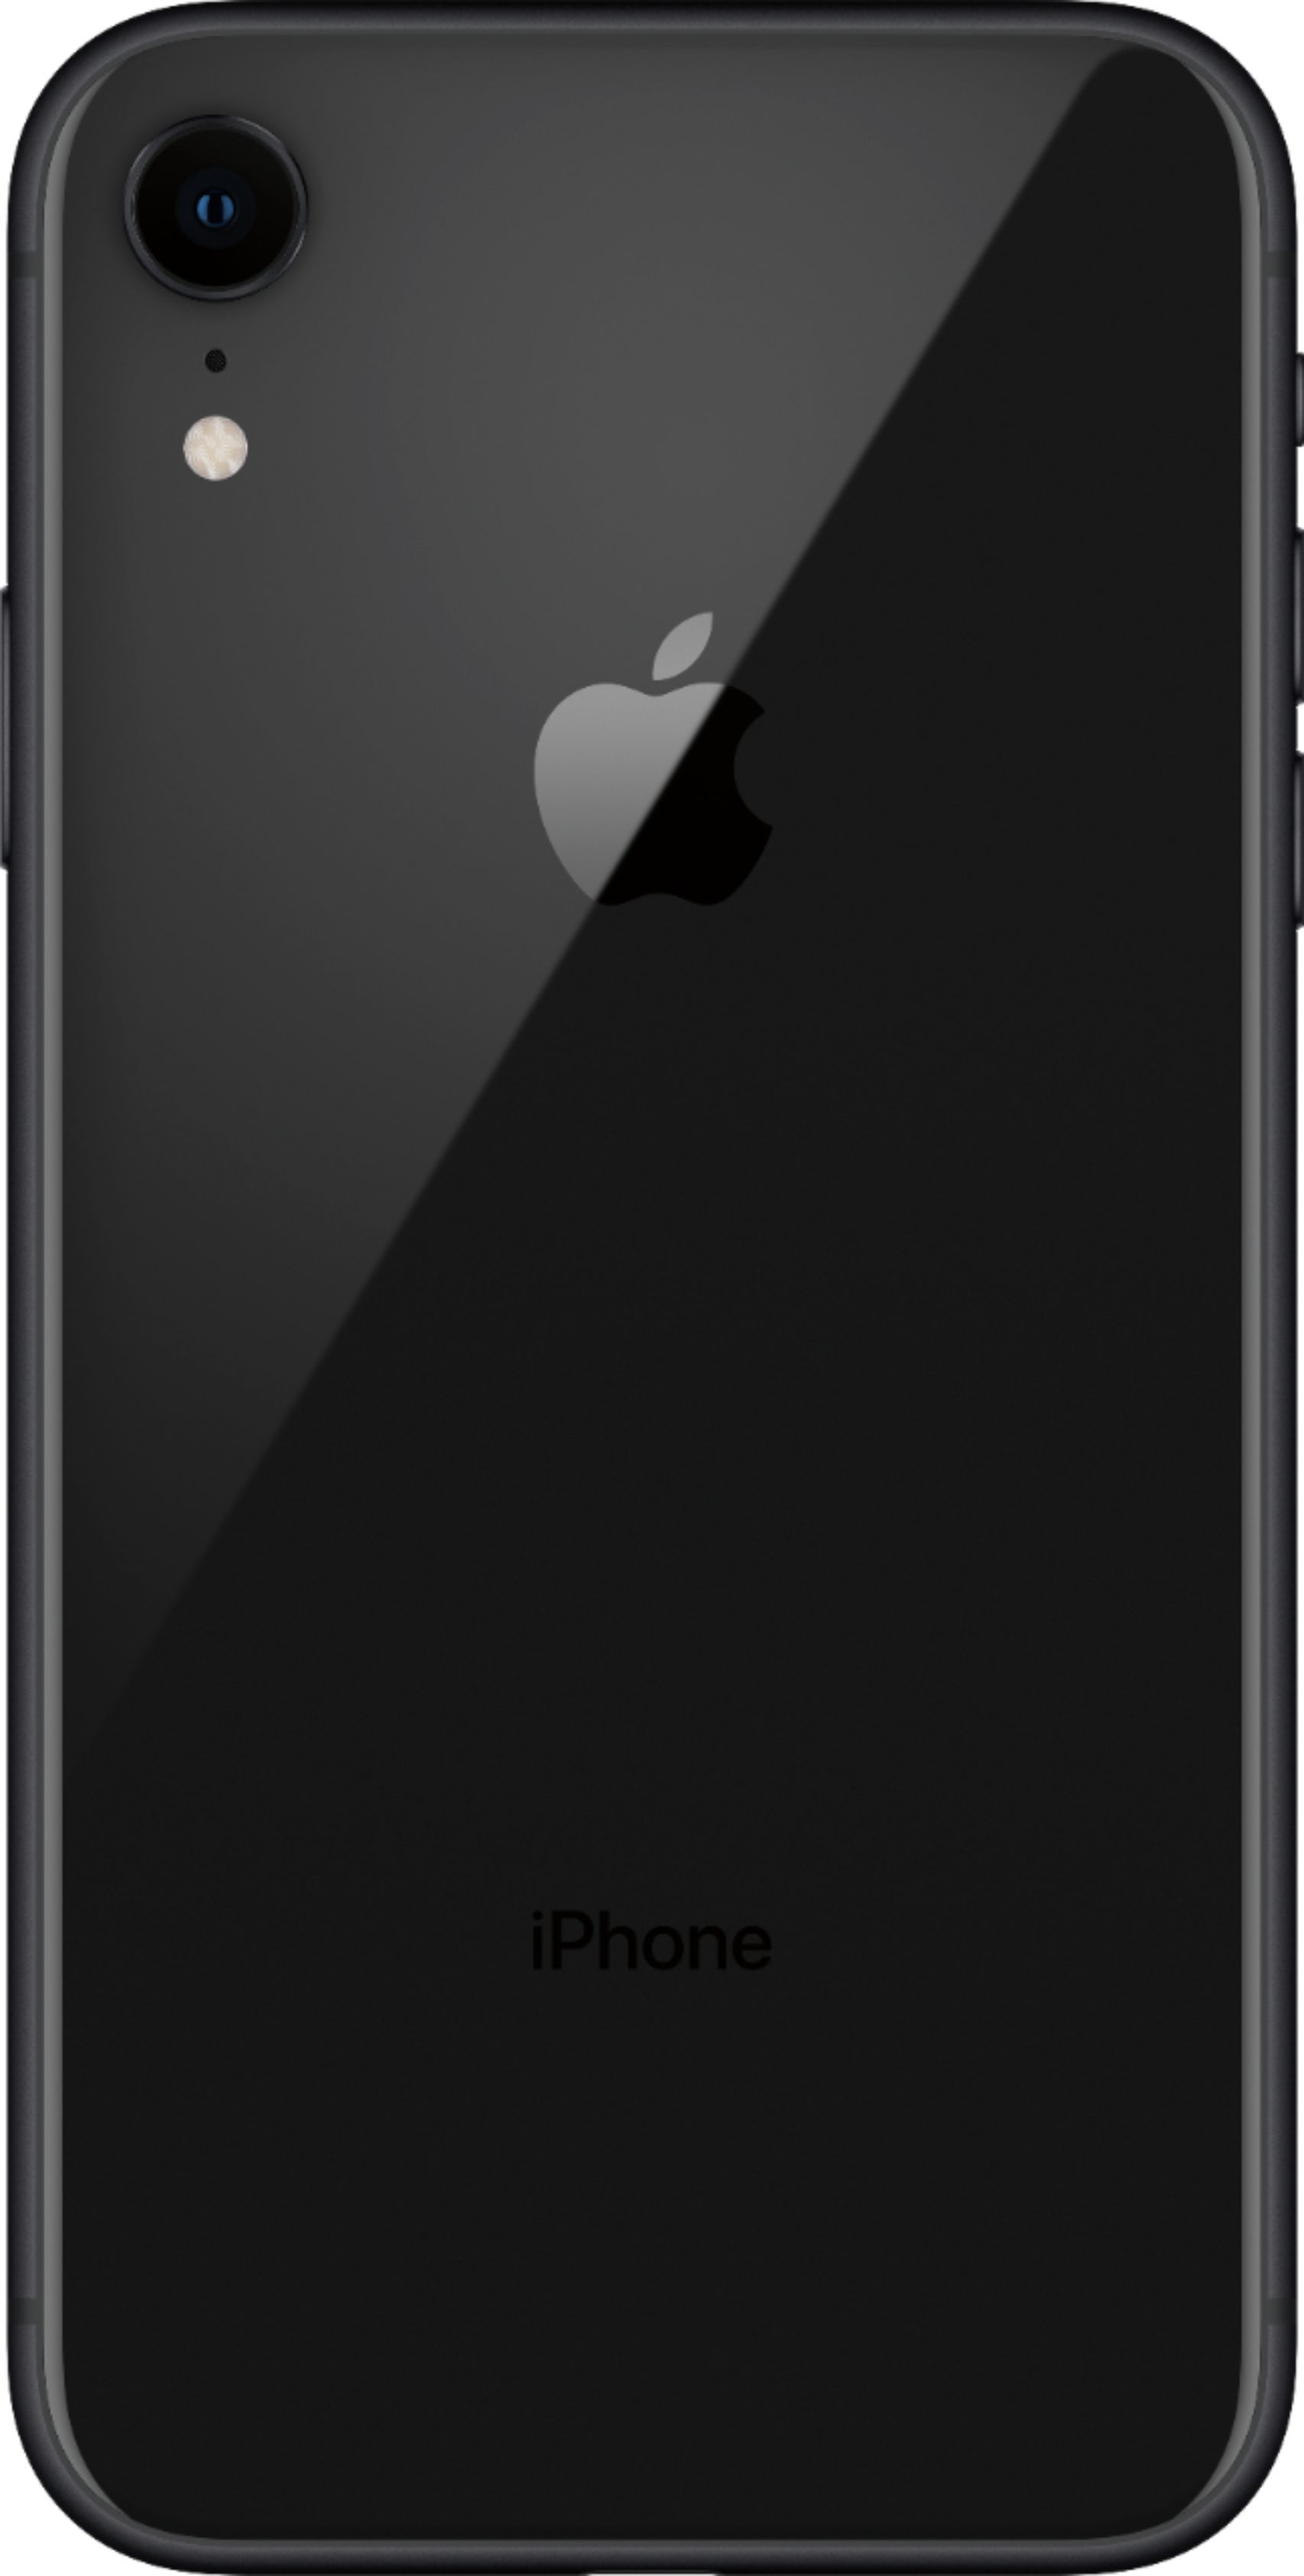 iPhone xr Black 64GB